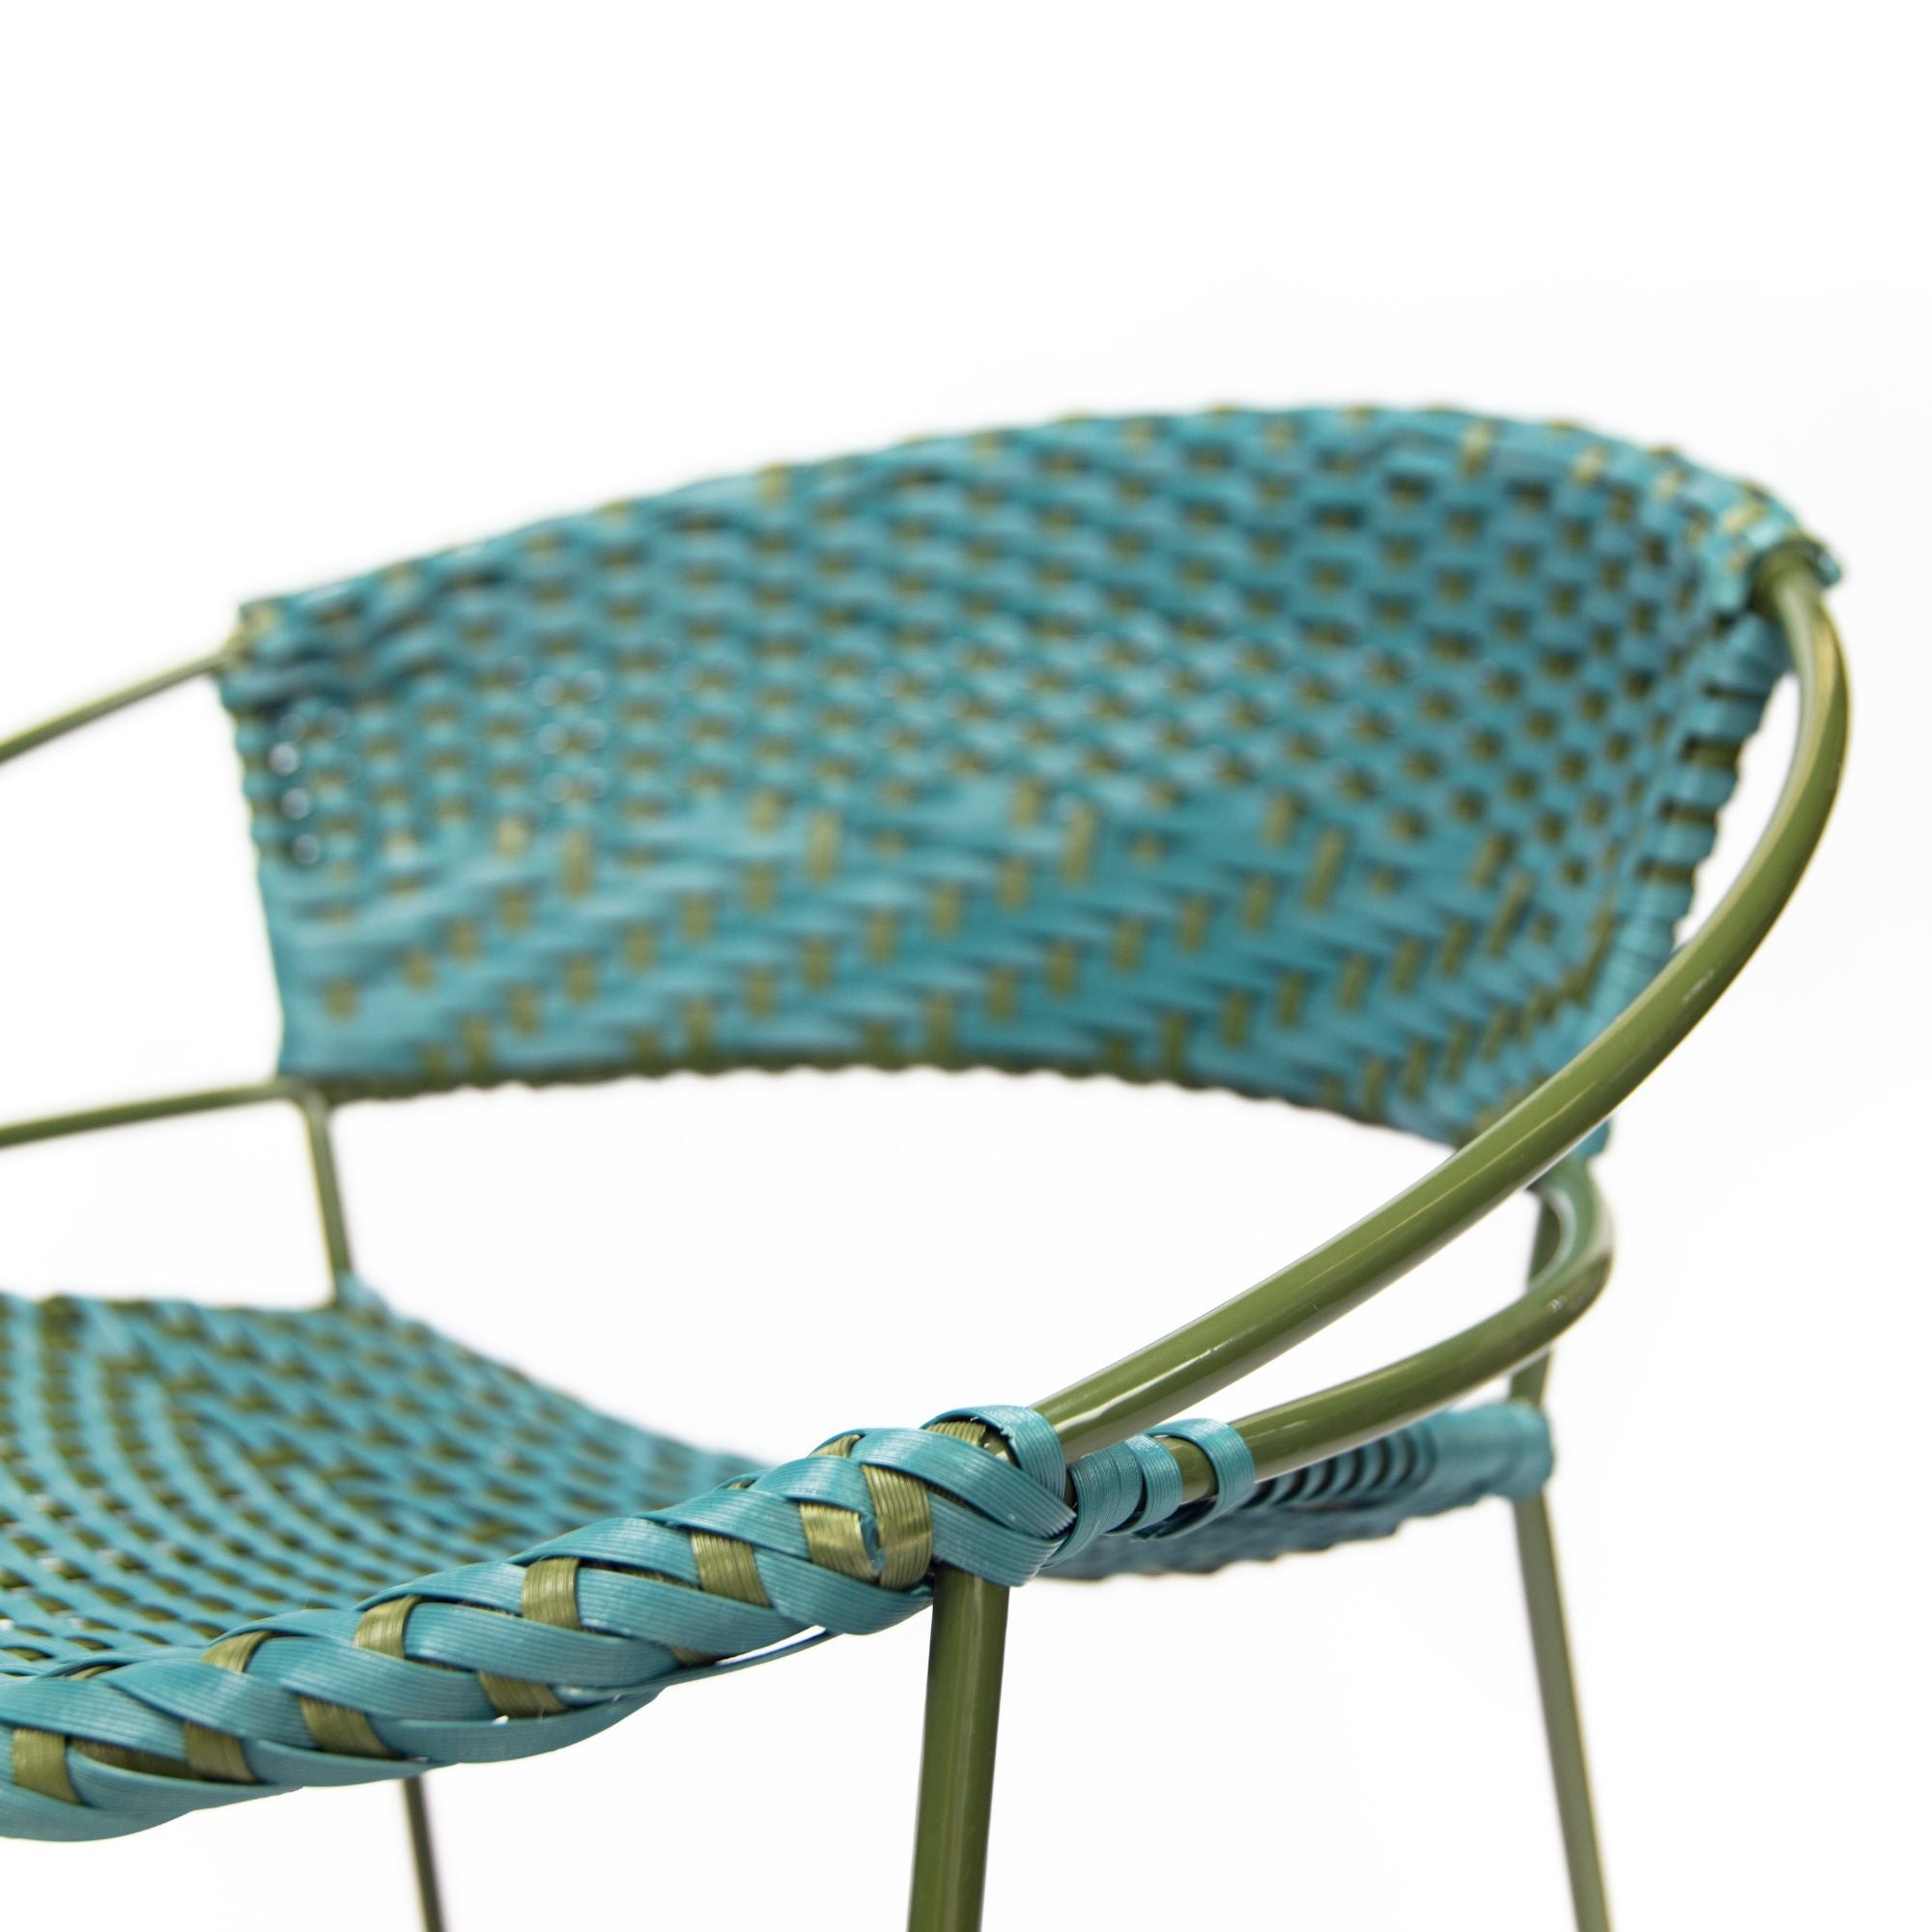 Woven Outdoor Dining Chair - Santorini